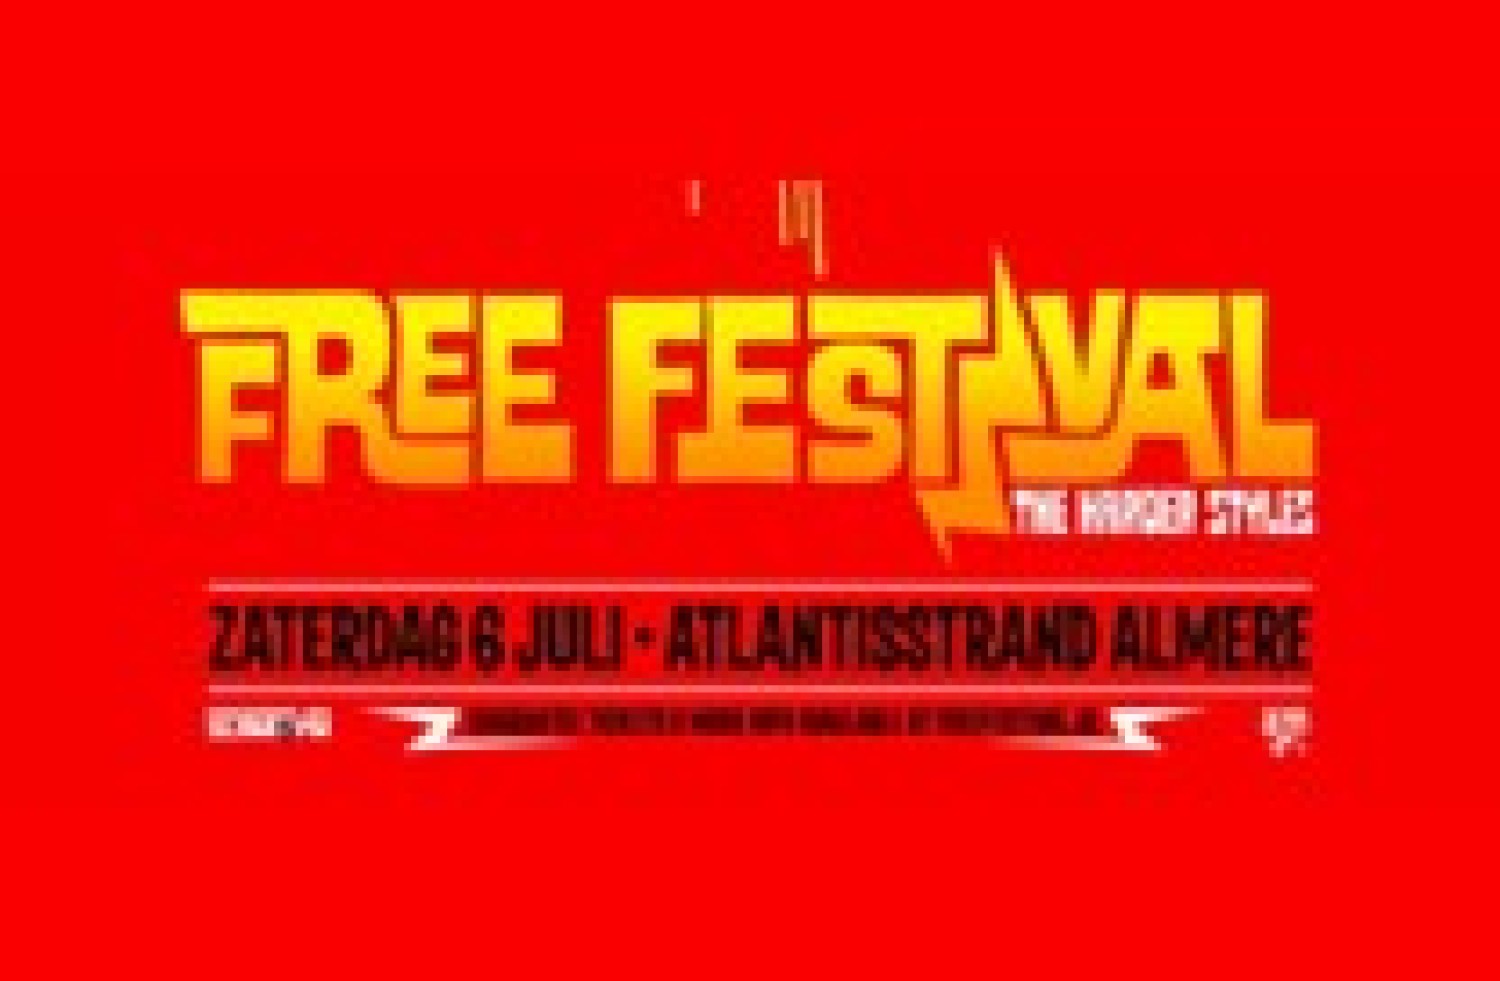 Party report: Free Festival (The Harder Styles), Atlantisstrand, 6 juli 2013